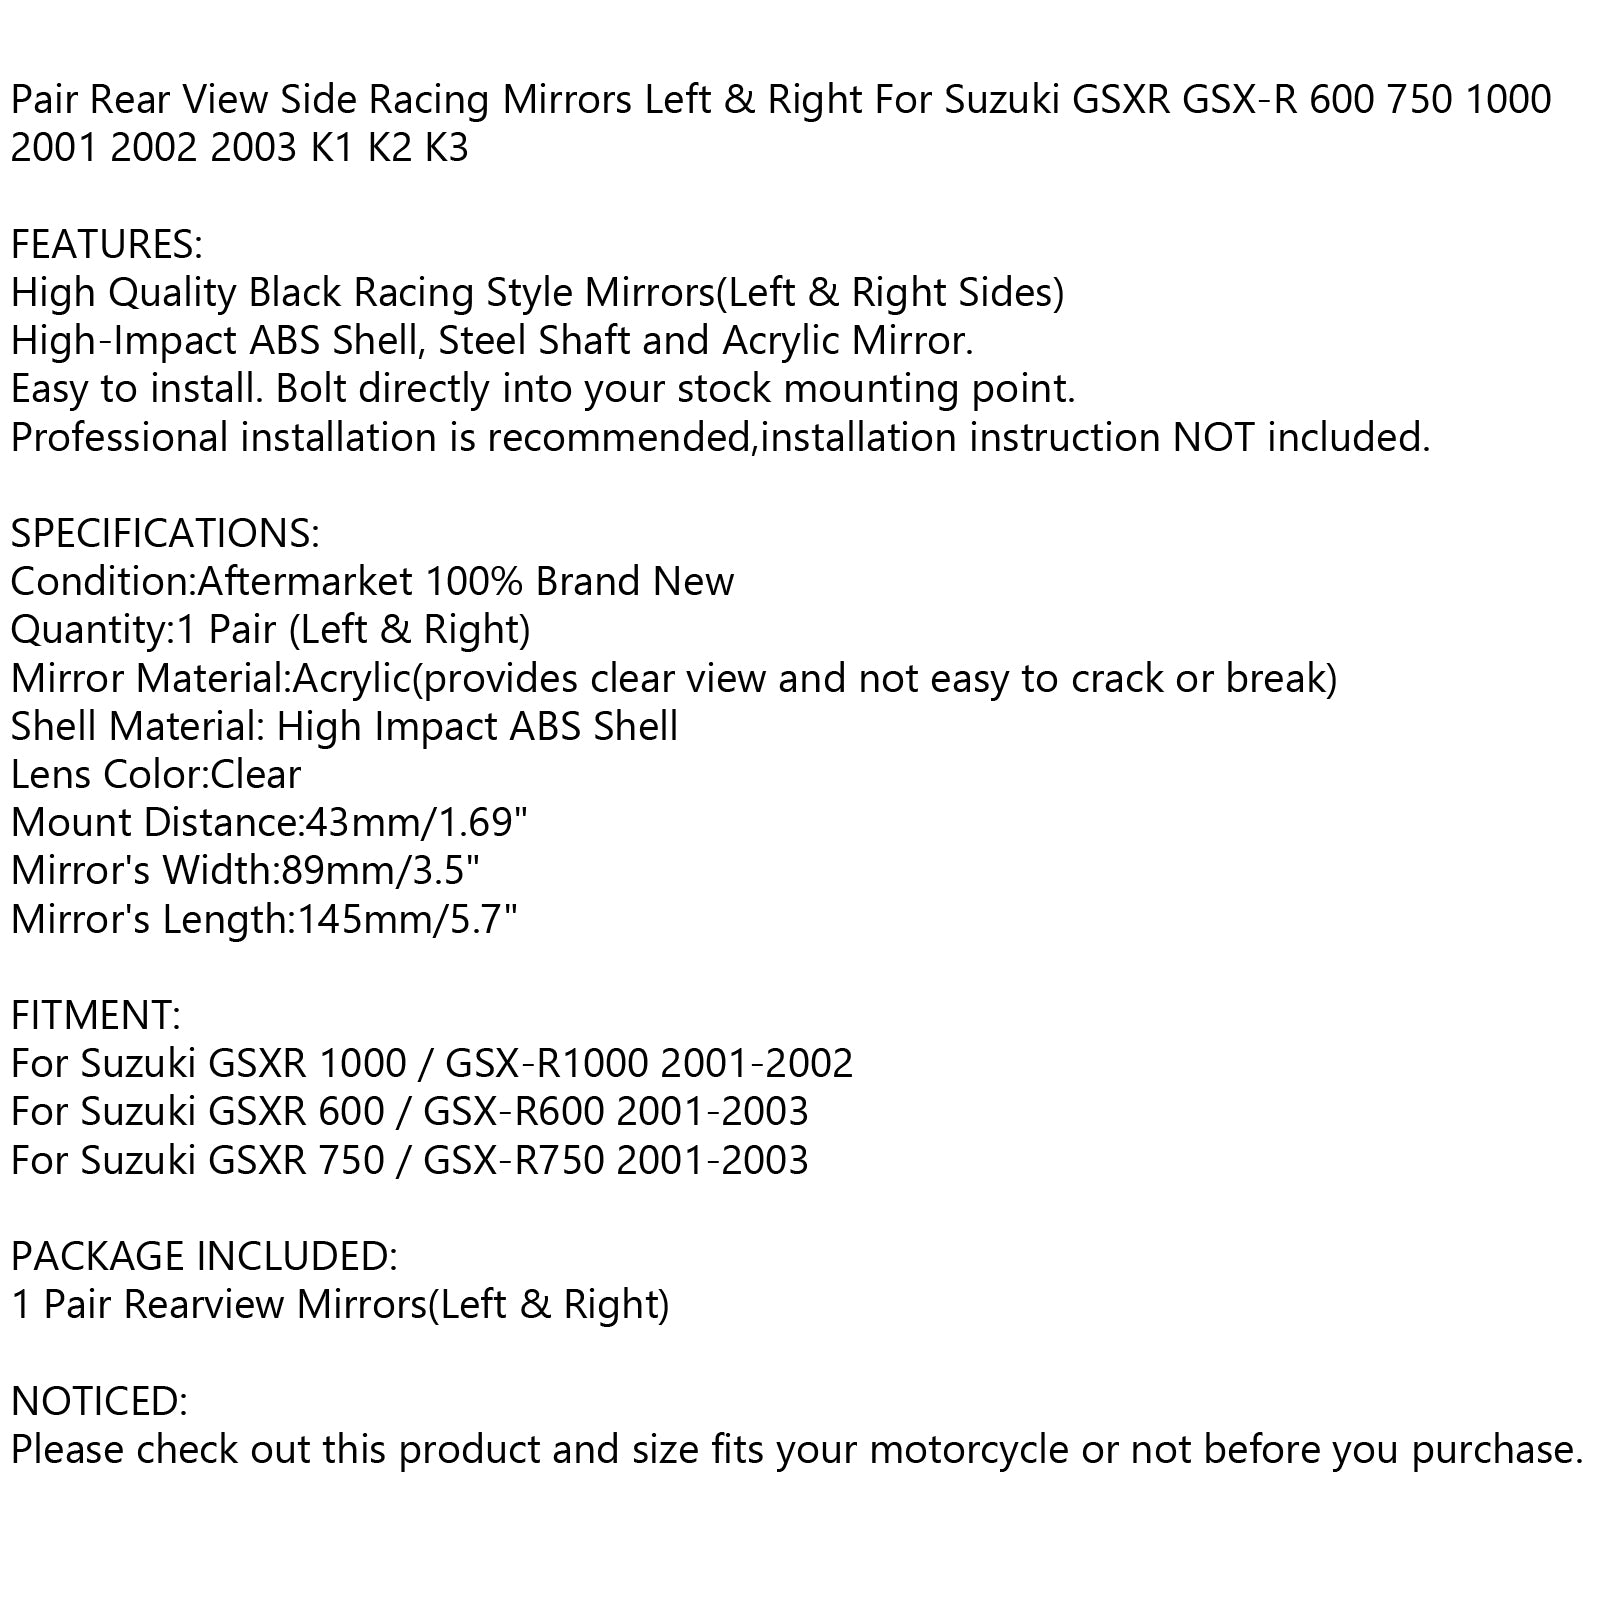 Black Racing Mirrors For Suzuki GSXR GSX-R 600 750 1000 K1 K2 K3 2001 2002 2003 Generic